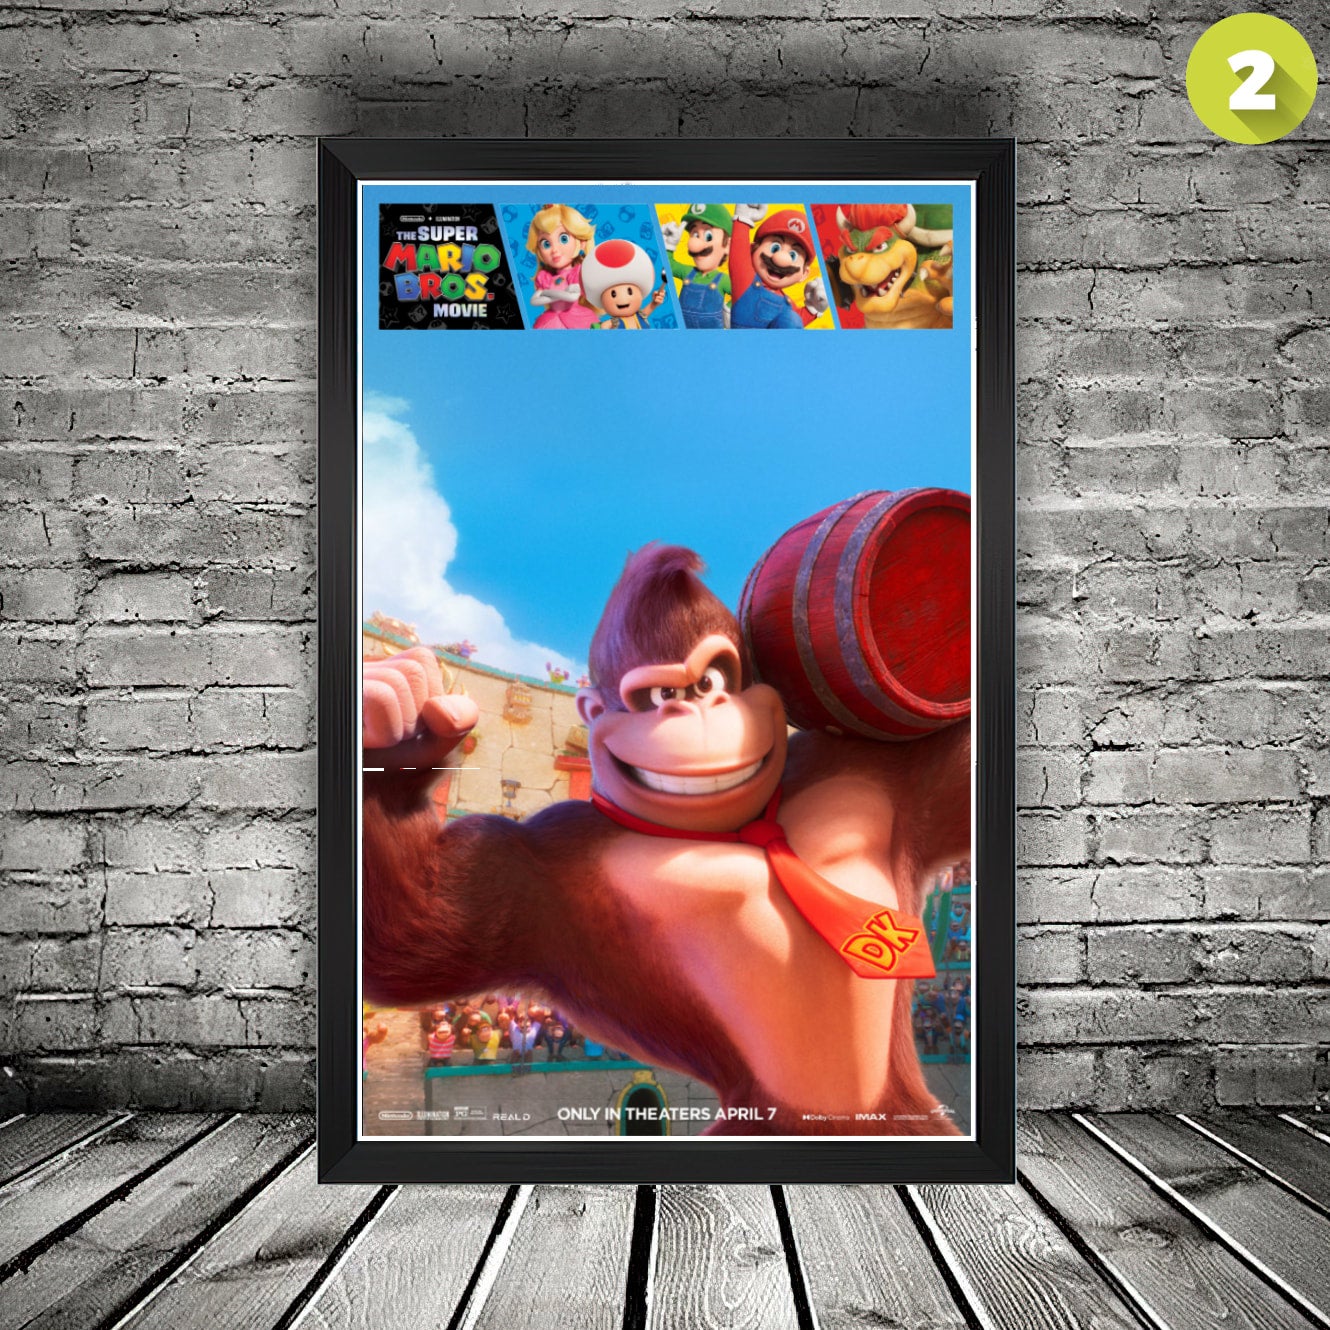 Super Smash Bros Movie Nintendo Mario Sonic Donkey Kong Poster Wall Decor  Poster Canvas - Mugteeco